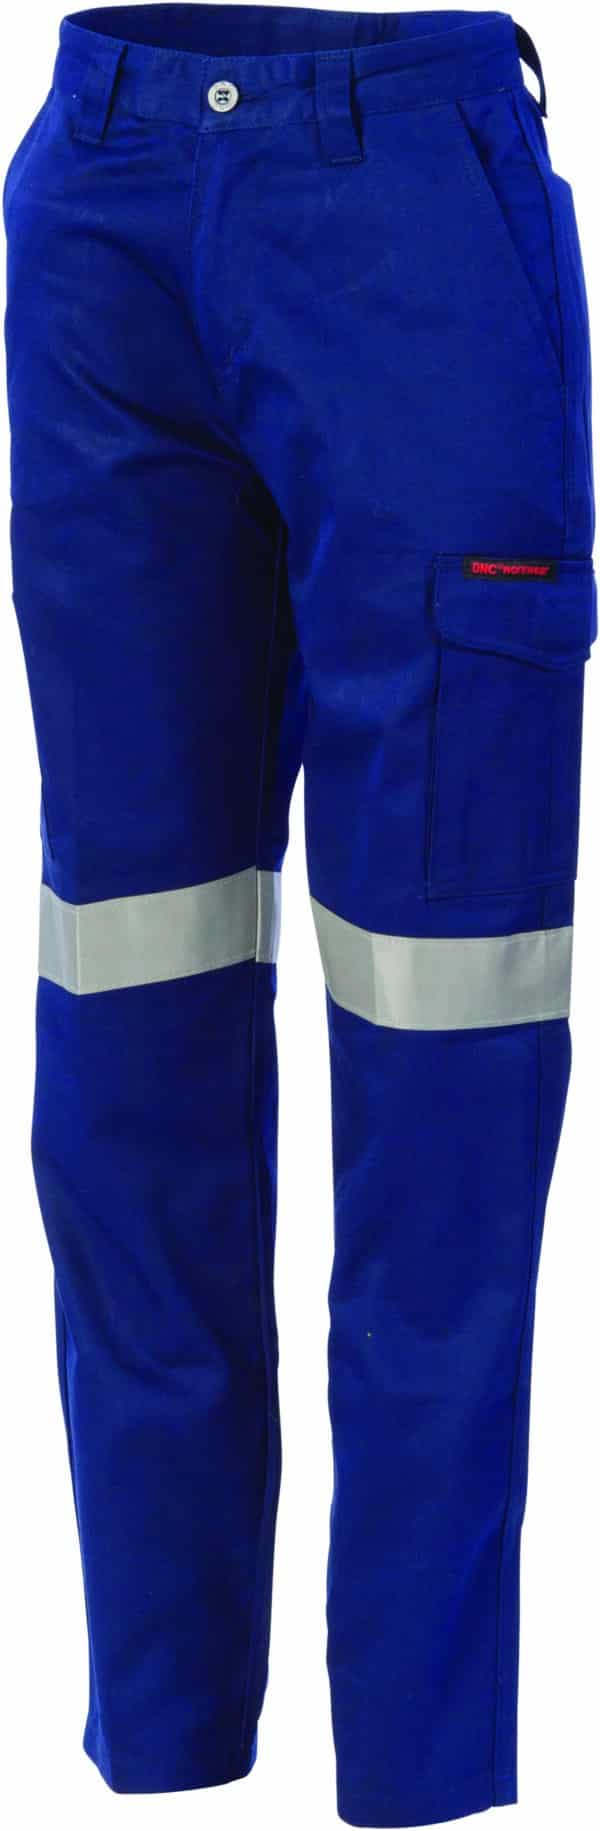 DNC Workwear Ladies Digga Cool-Breeze Cargo Taped Pants